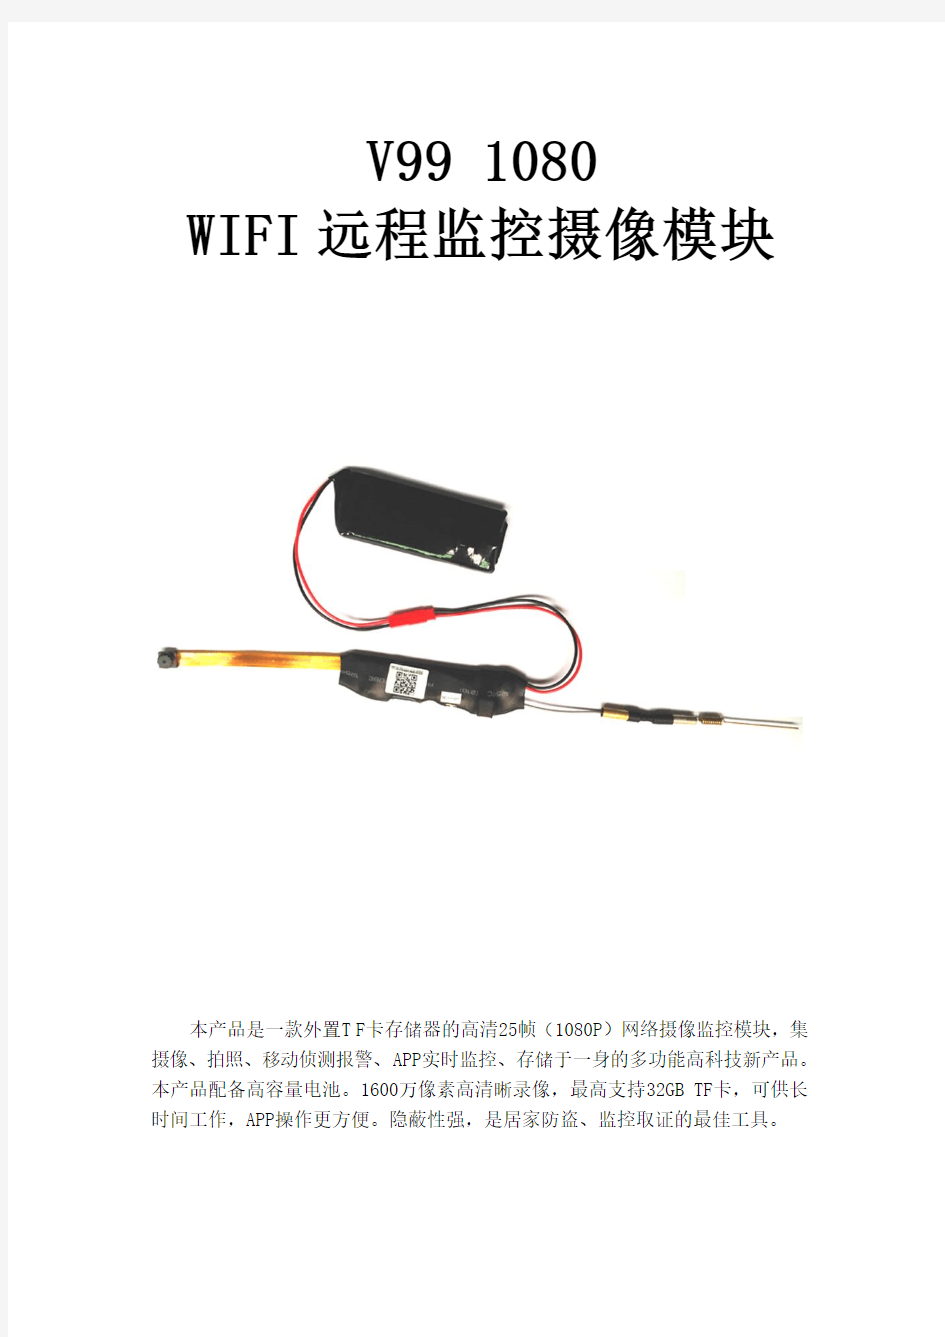 1080P wifi 模块中文说明书H264编码